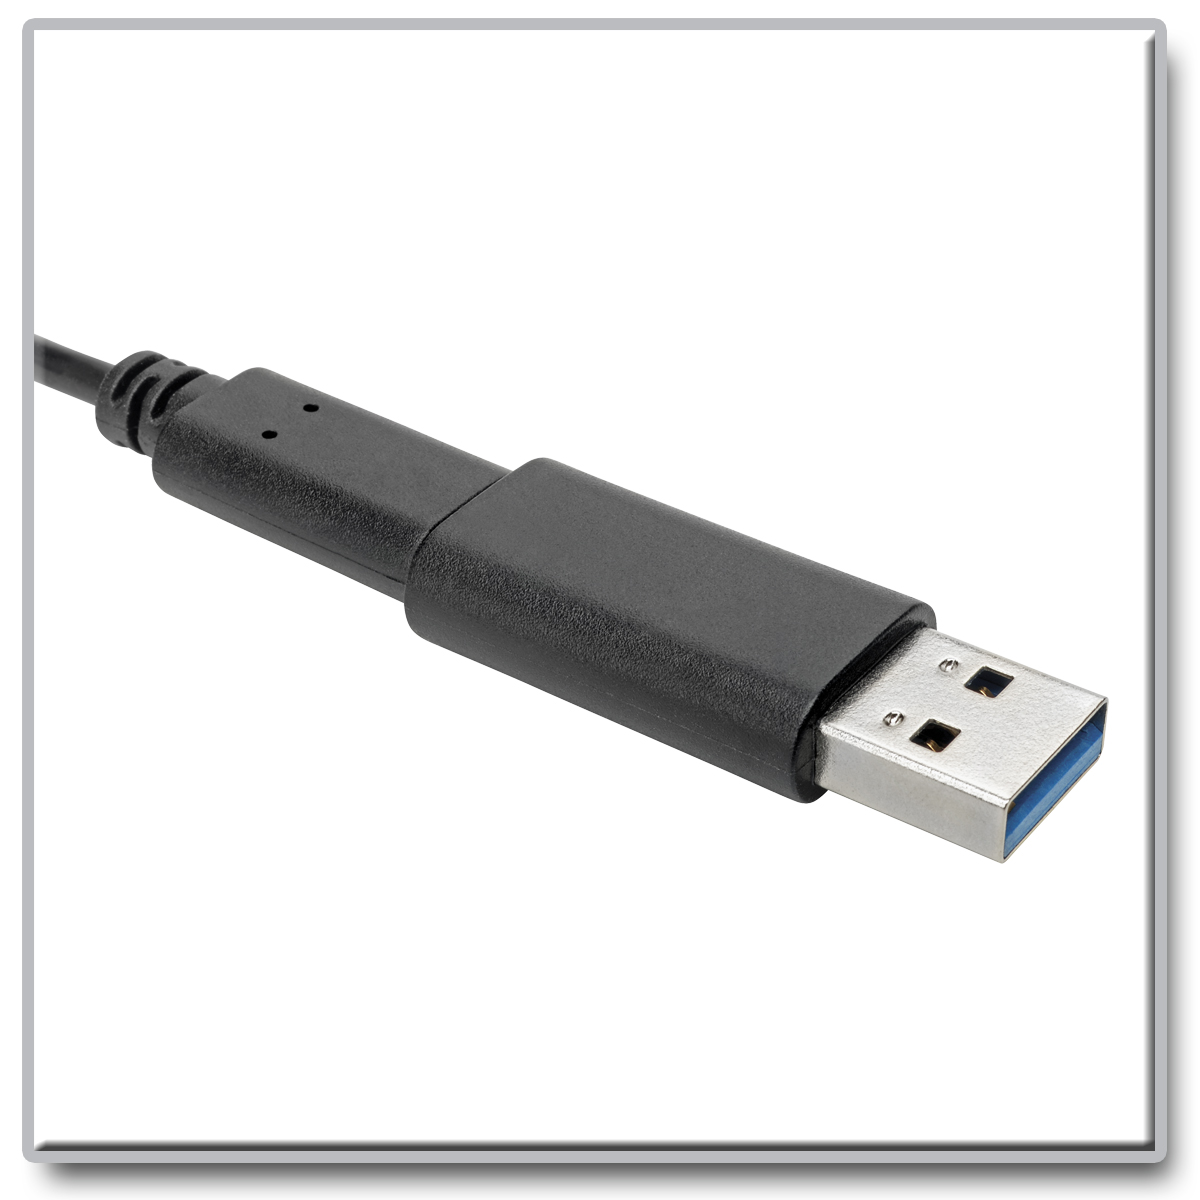 Clé USB C-Laeta, USB 3.1 / USB 3.0 Type-C, 16 Go, 40 Mo / s, argentée